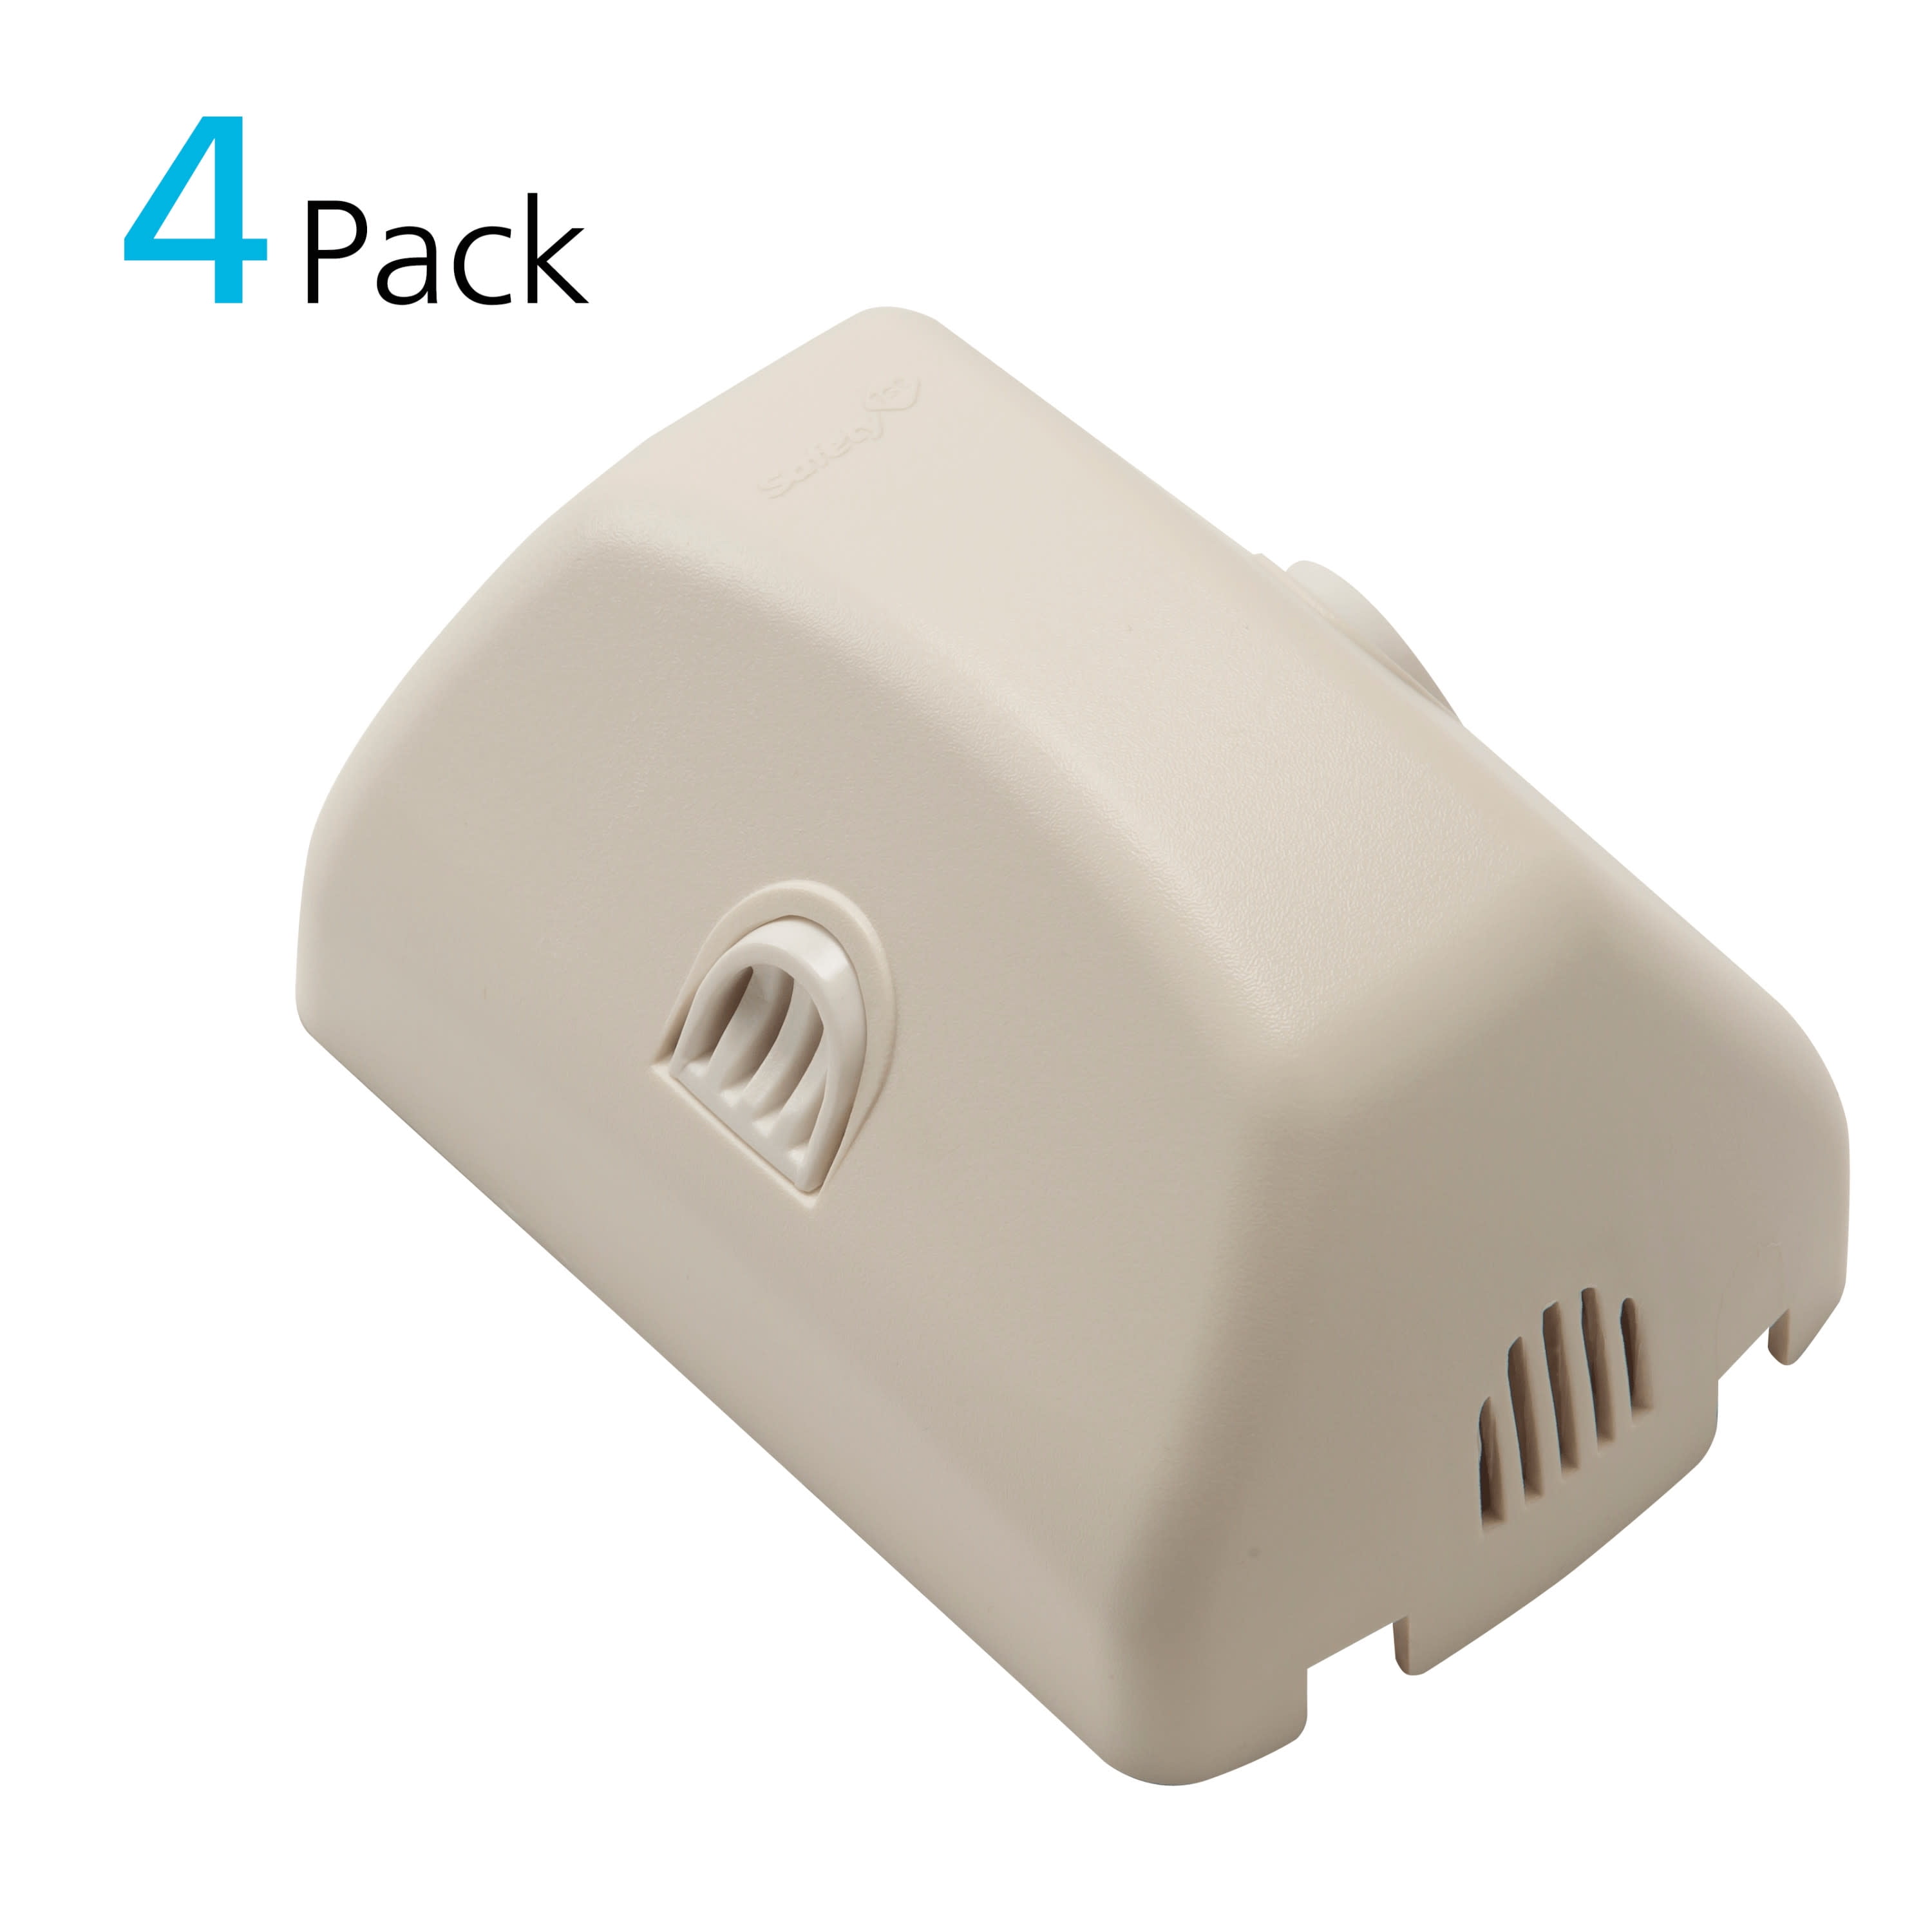 Pack de 12 unidades de Cubre-enchufe Transparente Plug Protector Safety 1st  - 0.7 cm